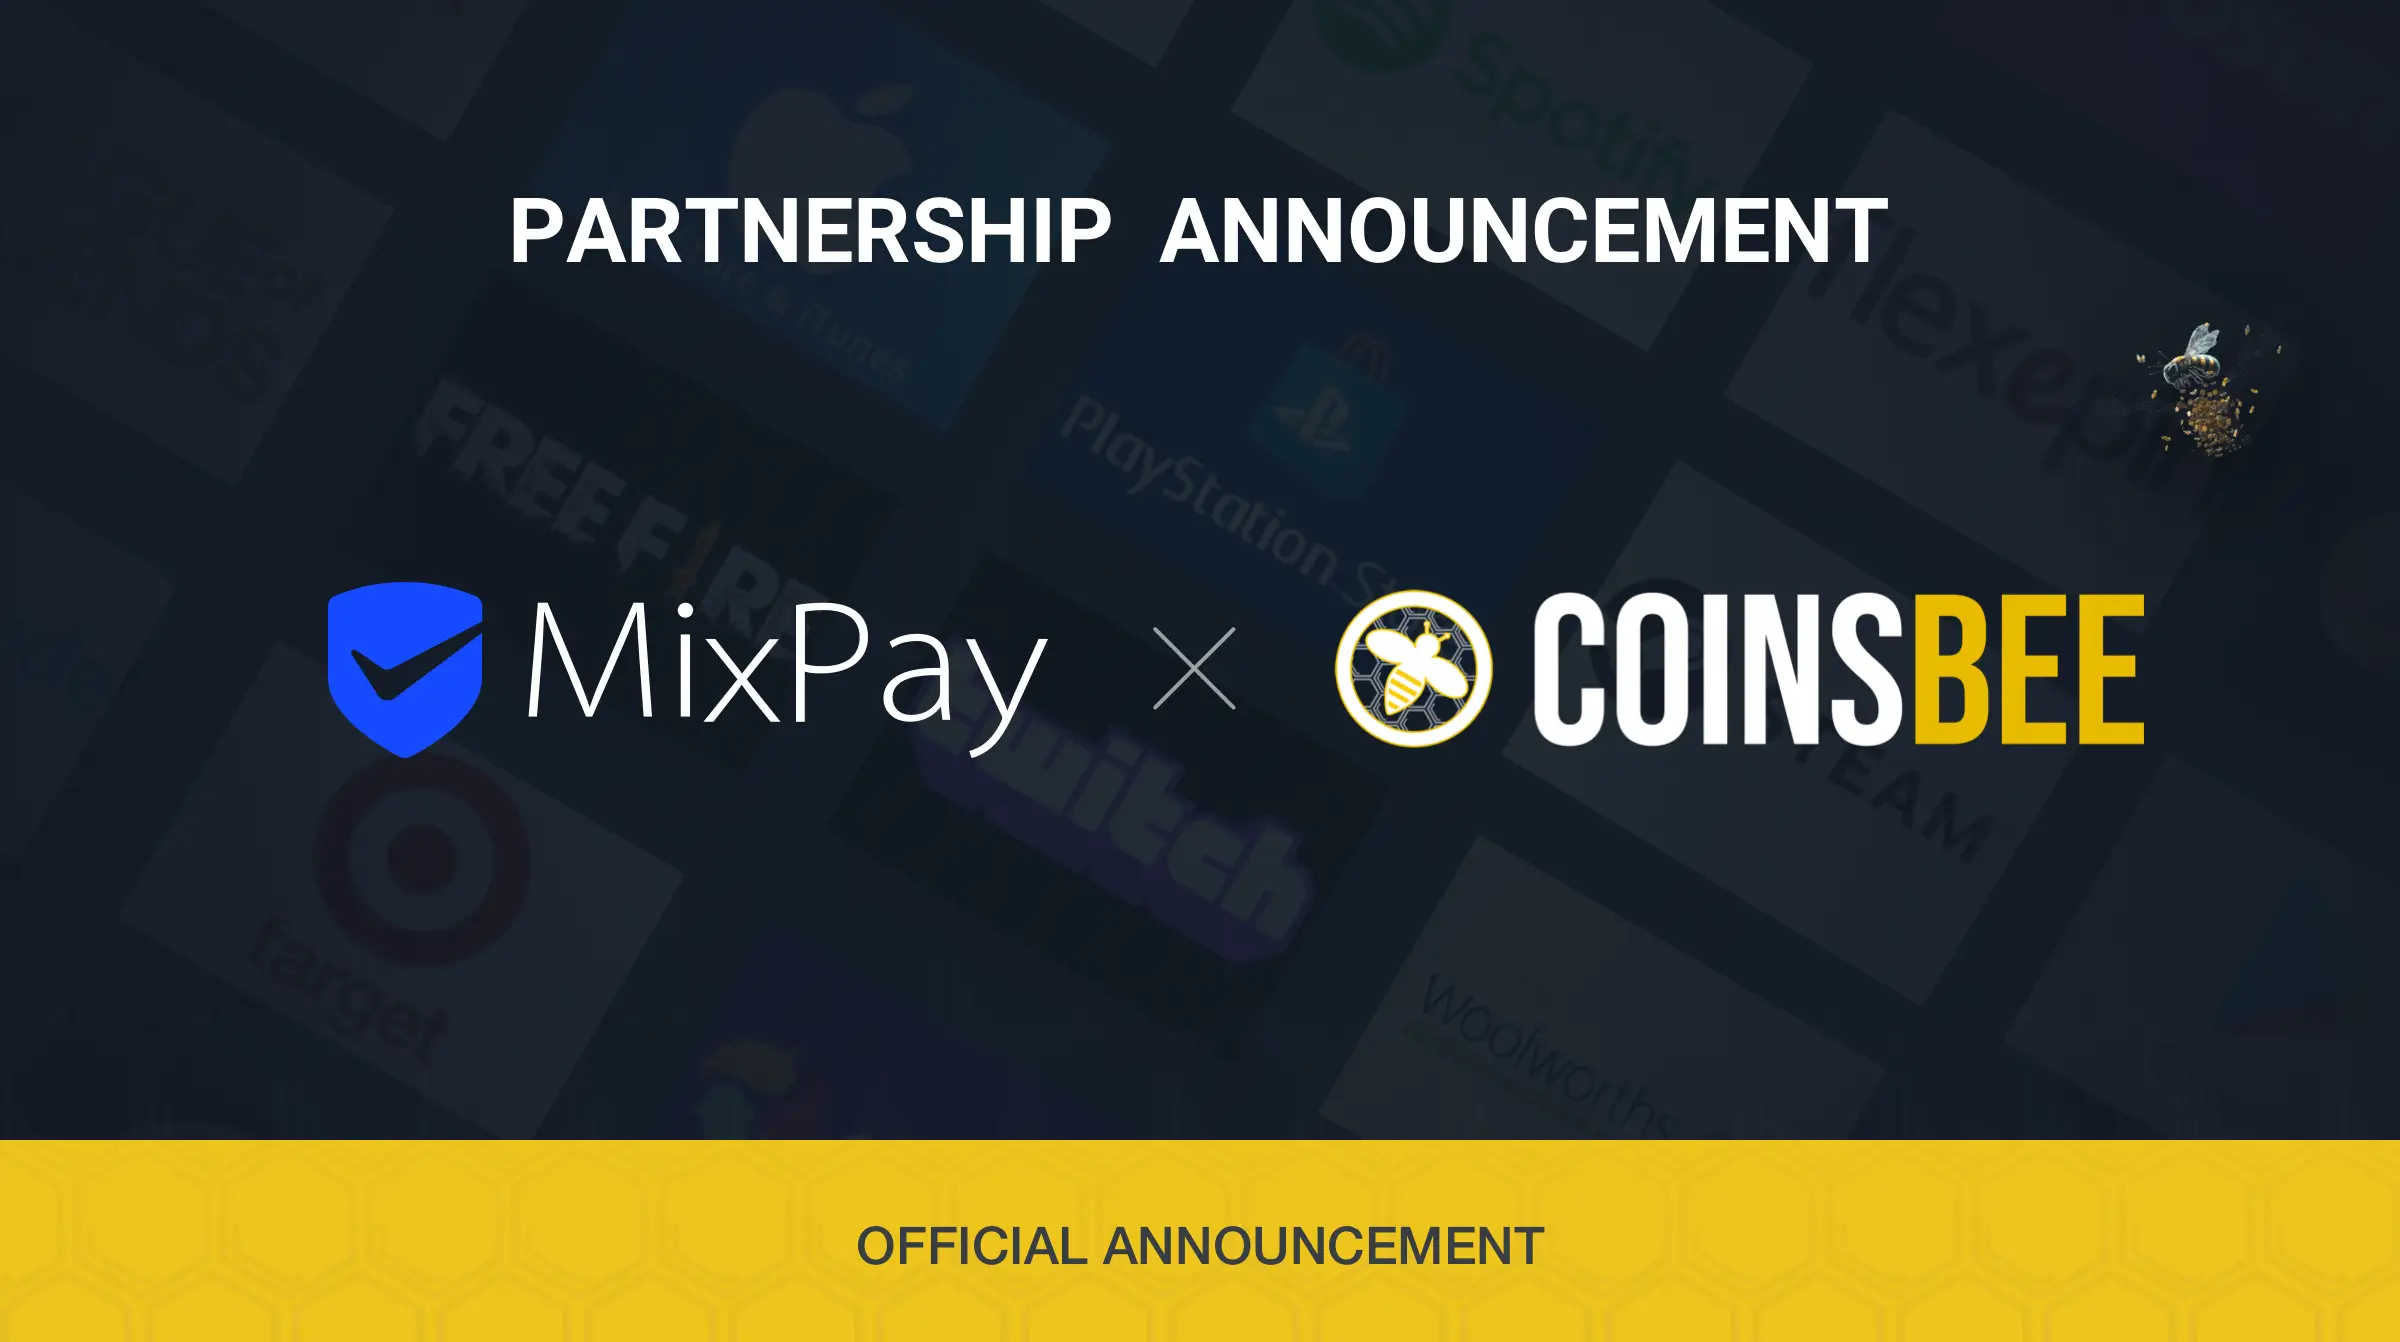 partnership between MixPay and Coinsbee